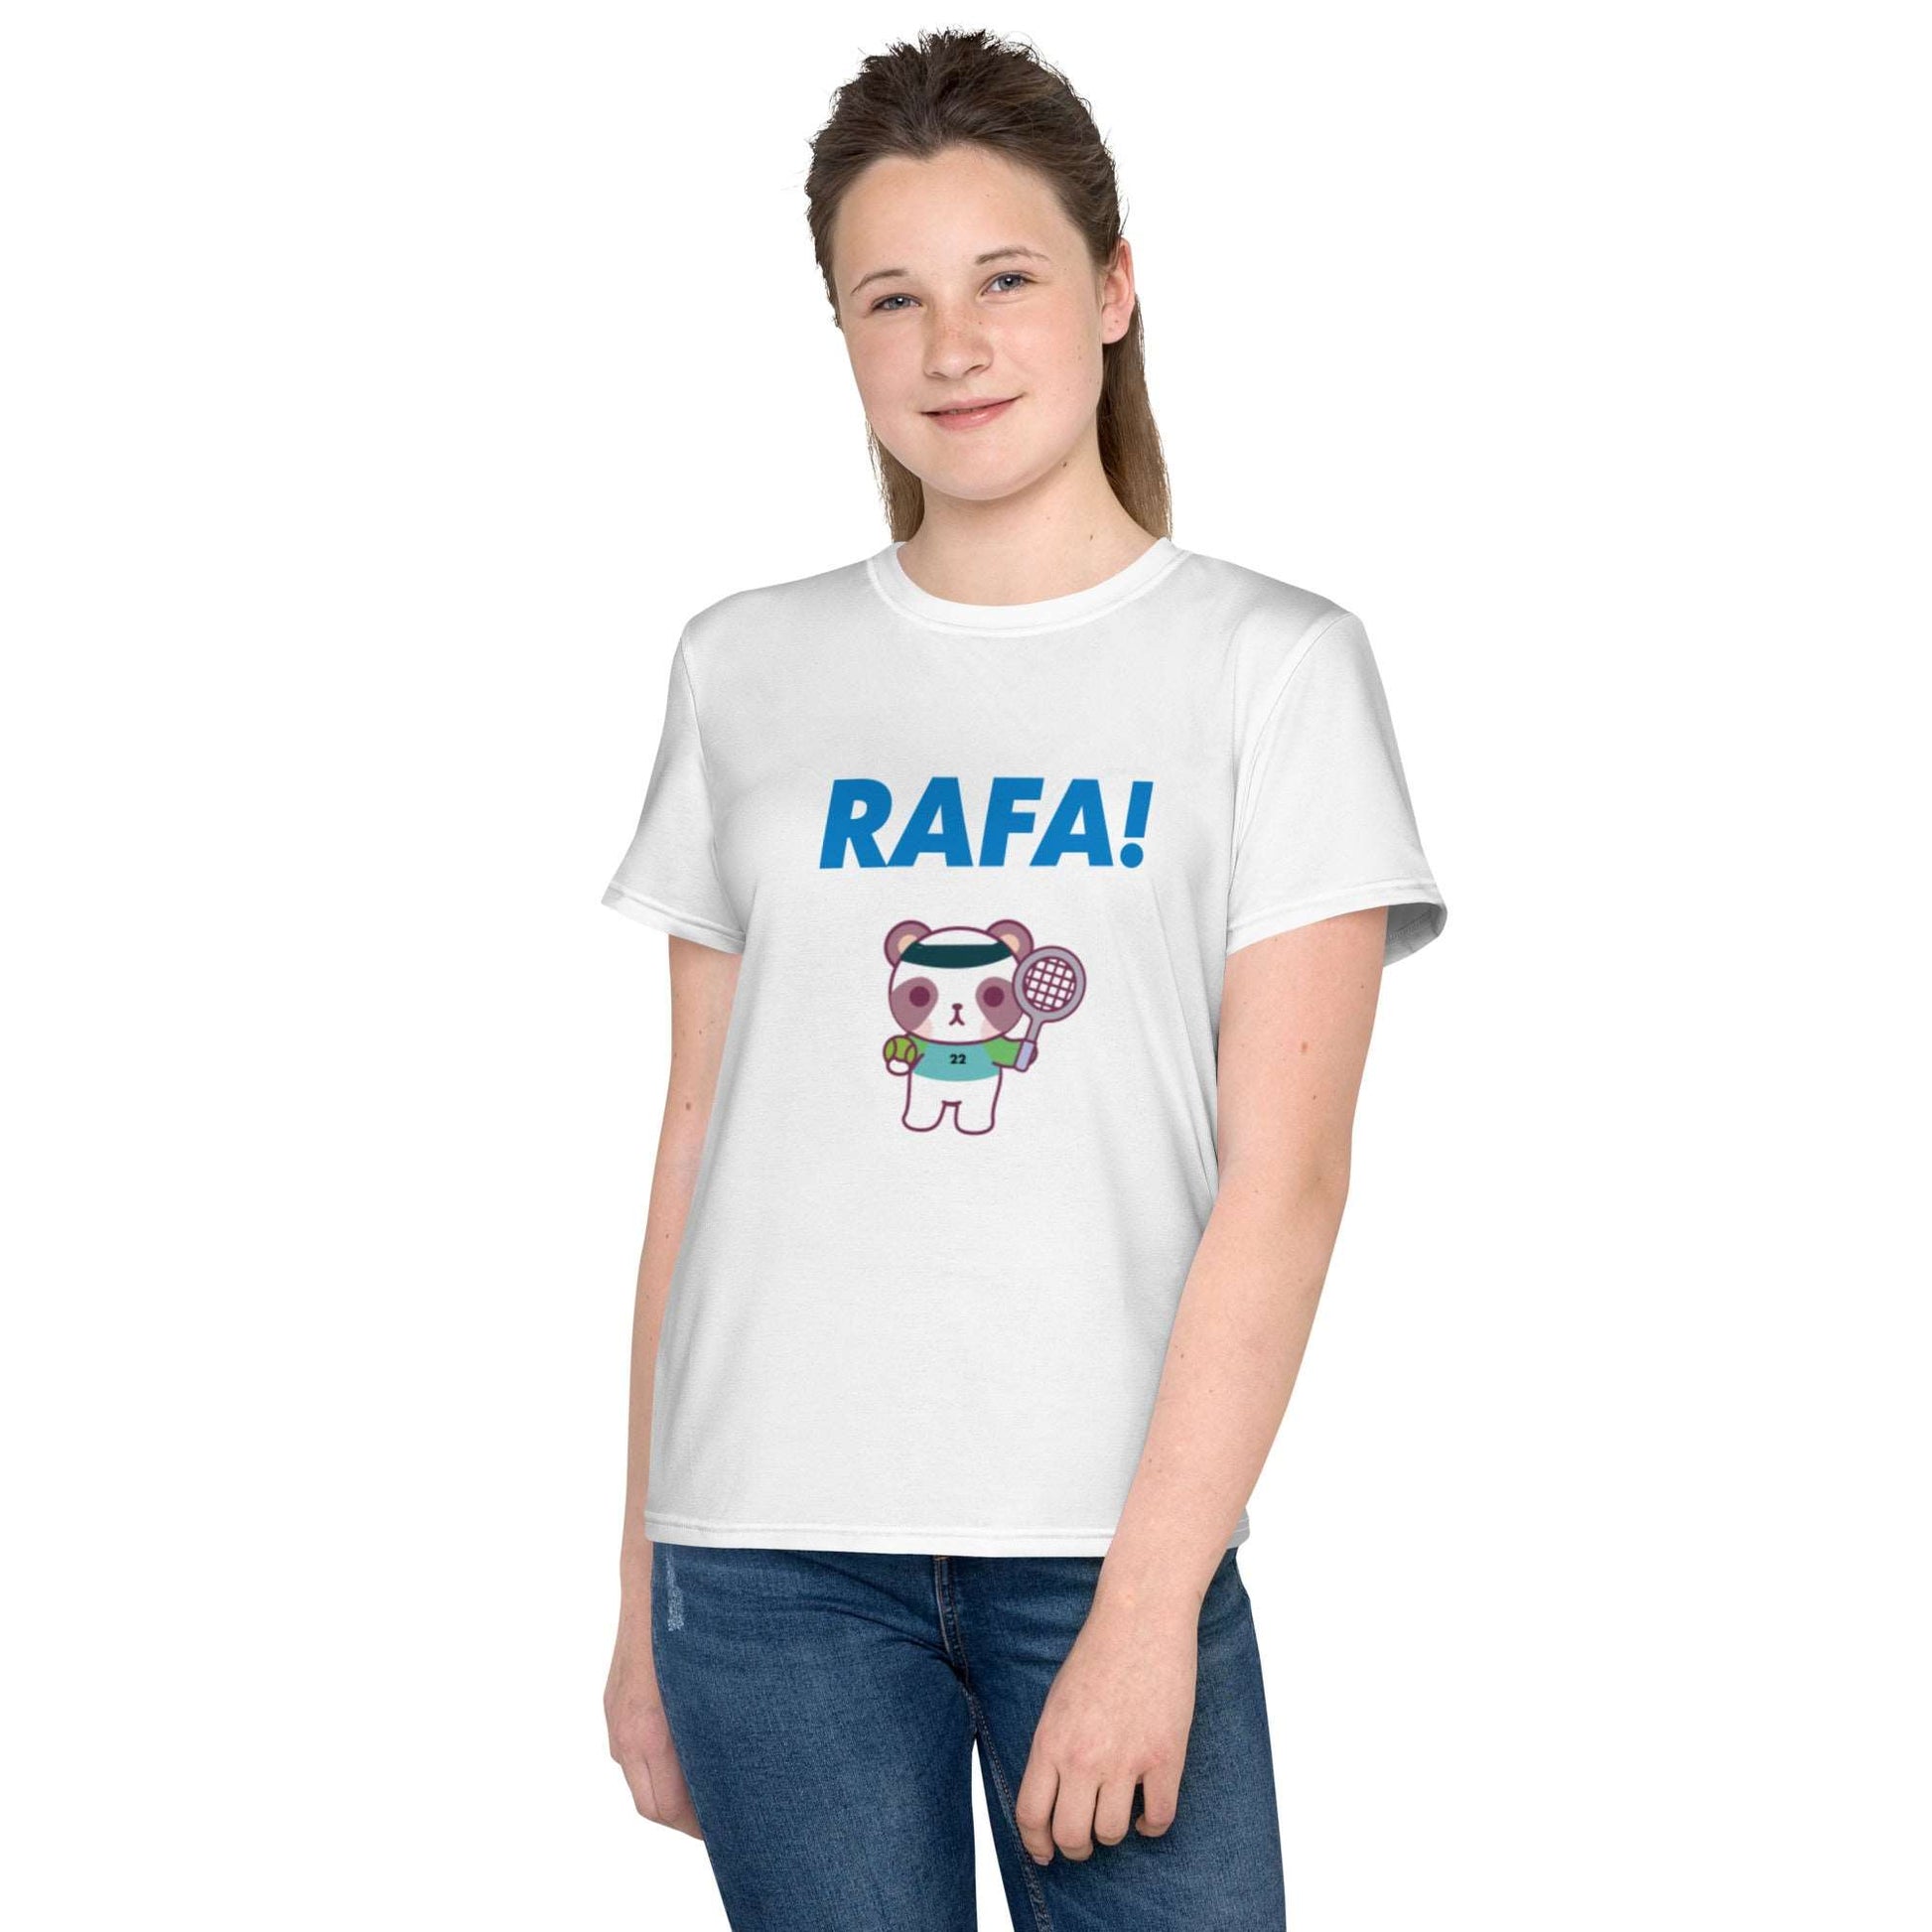 Youth Athletic Performance Rafa 22 T-Shirt (Sizes 8-20) - TOKKITENNIS